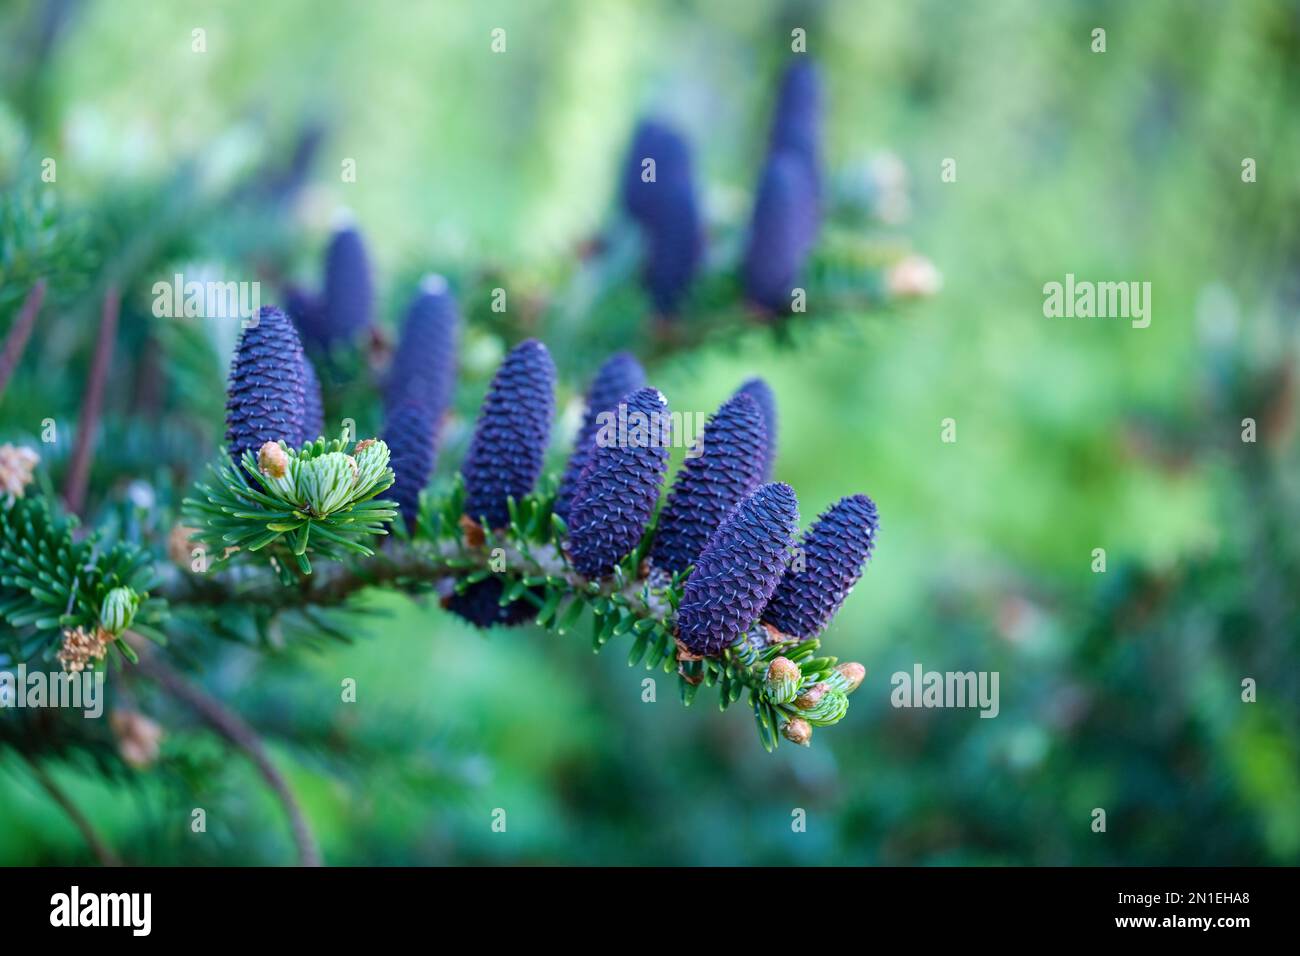 Abies koreana, koreanische Tanne, immergrüner Nadelbaum, dunkelgrüne, nadelförmige Blätter, weiße, blaue oder lila Zapfen Stockfoto